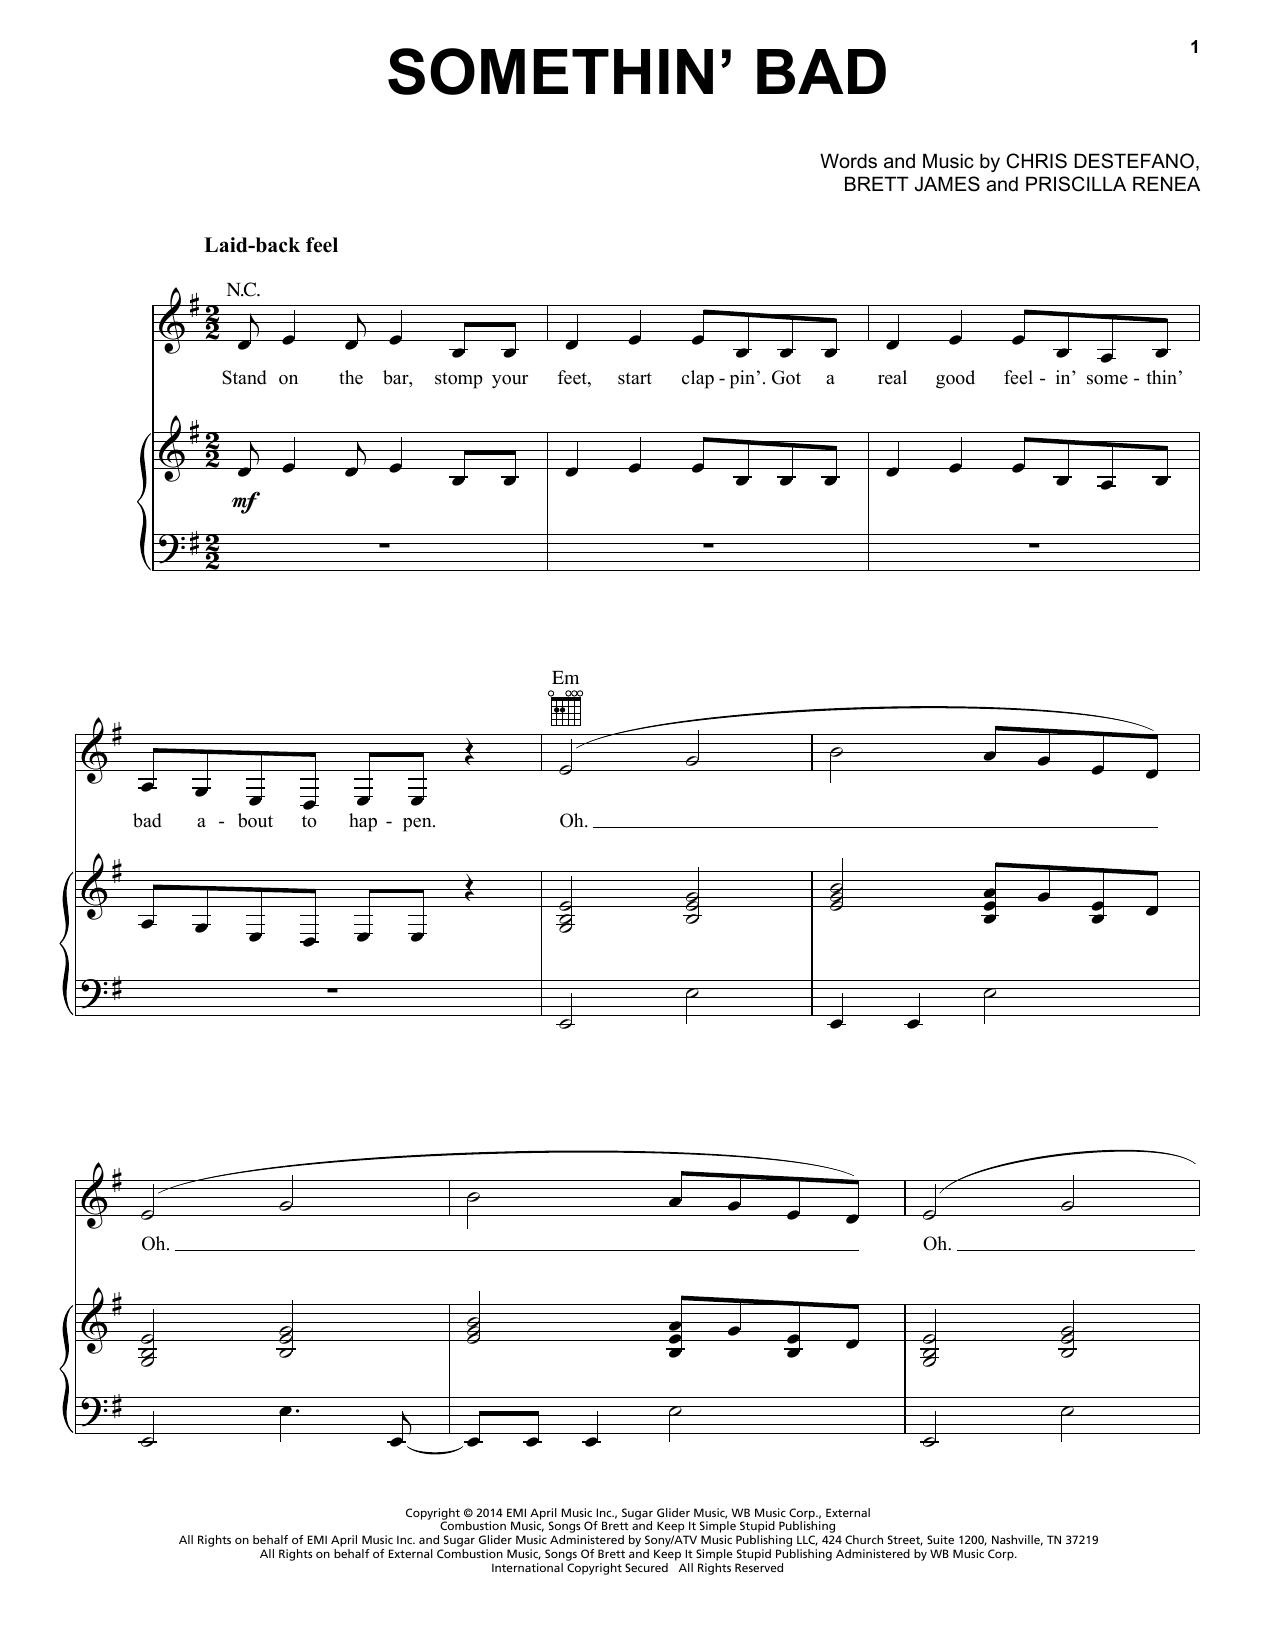 Miranda Lambert Somethin' Bad Sheet Music Notes & Chords for Piano, Vocal & Guitar (Right-Hand Melody) - Download or Print PDF